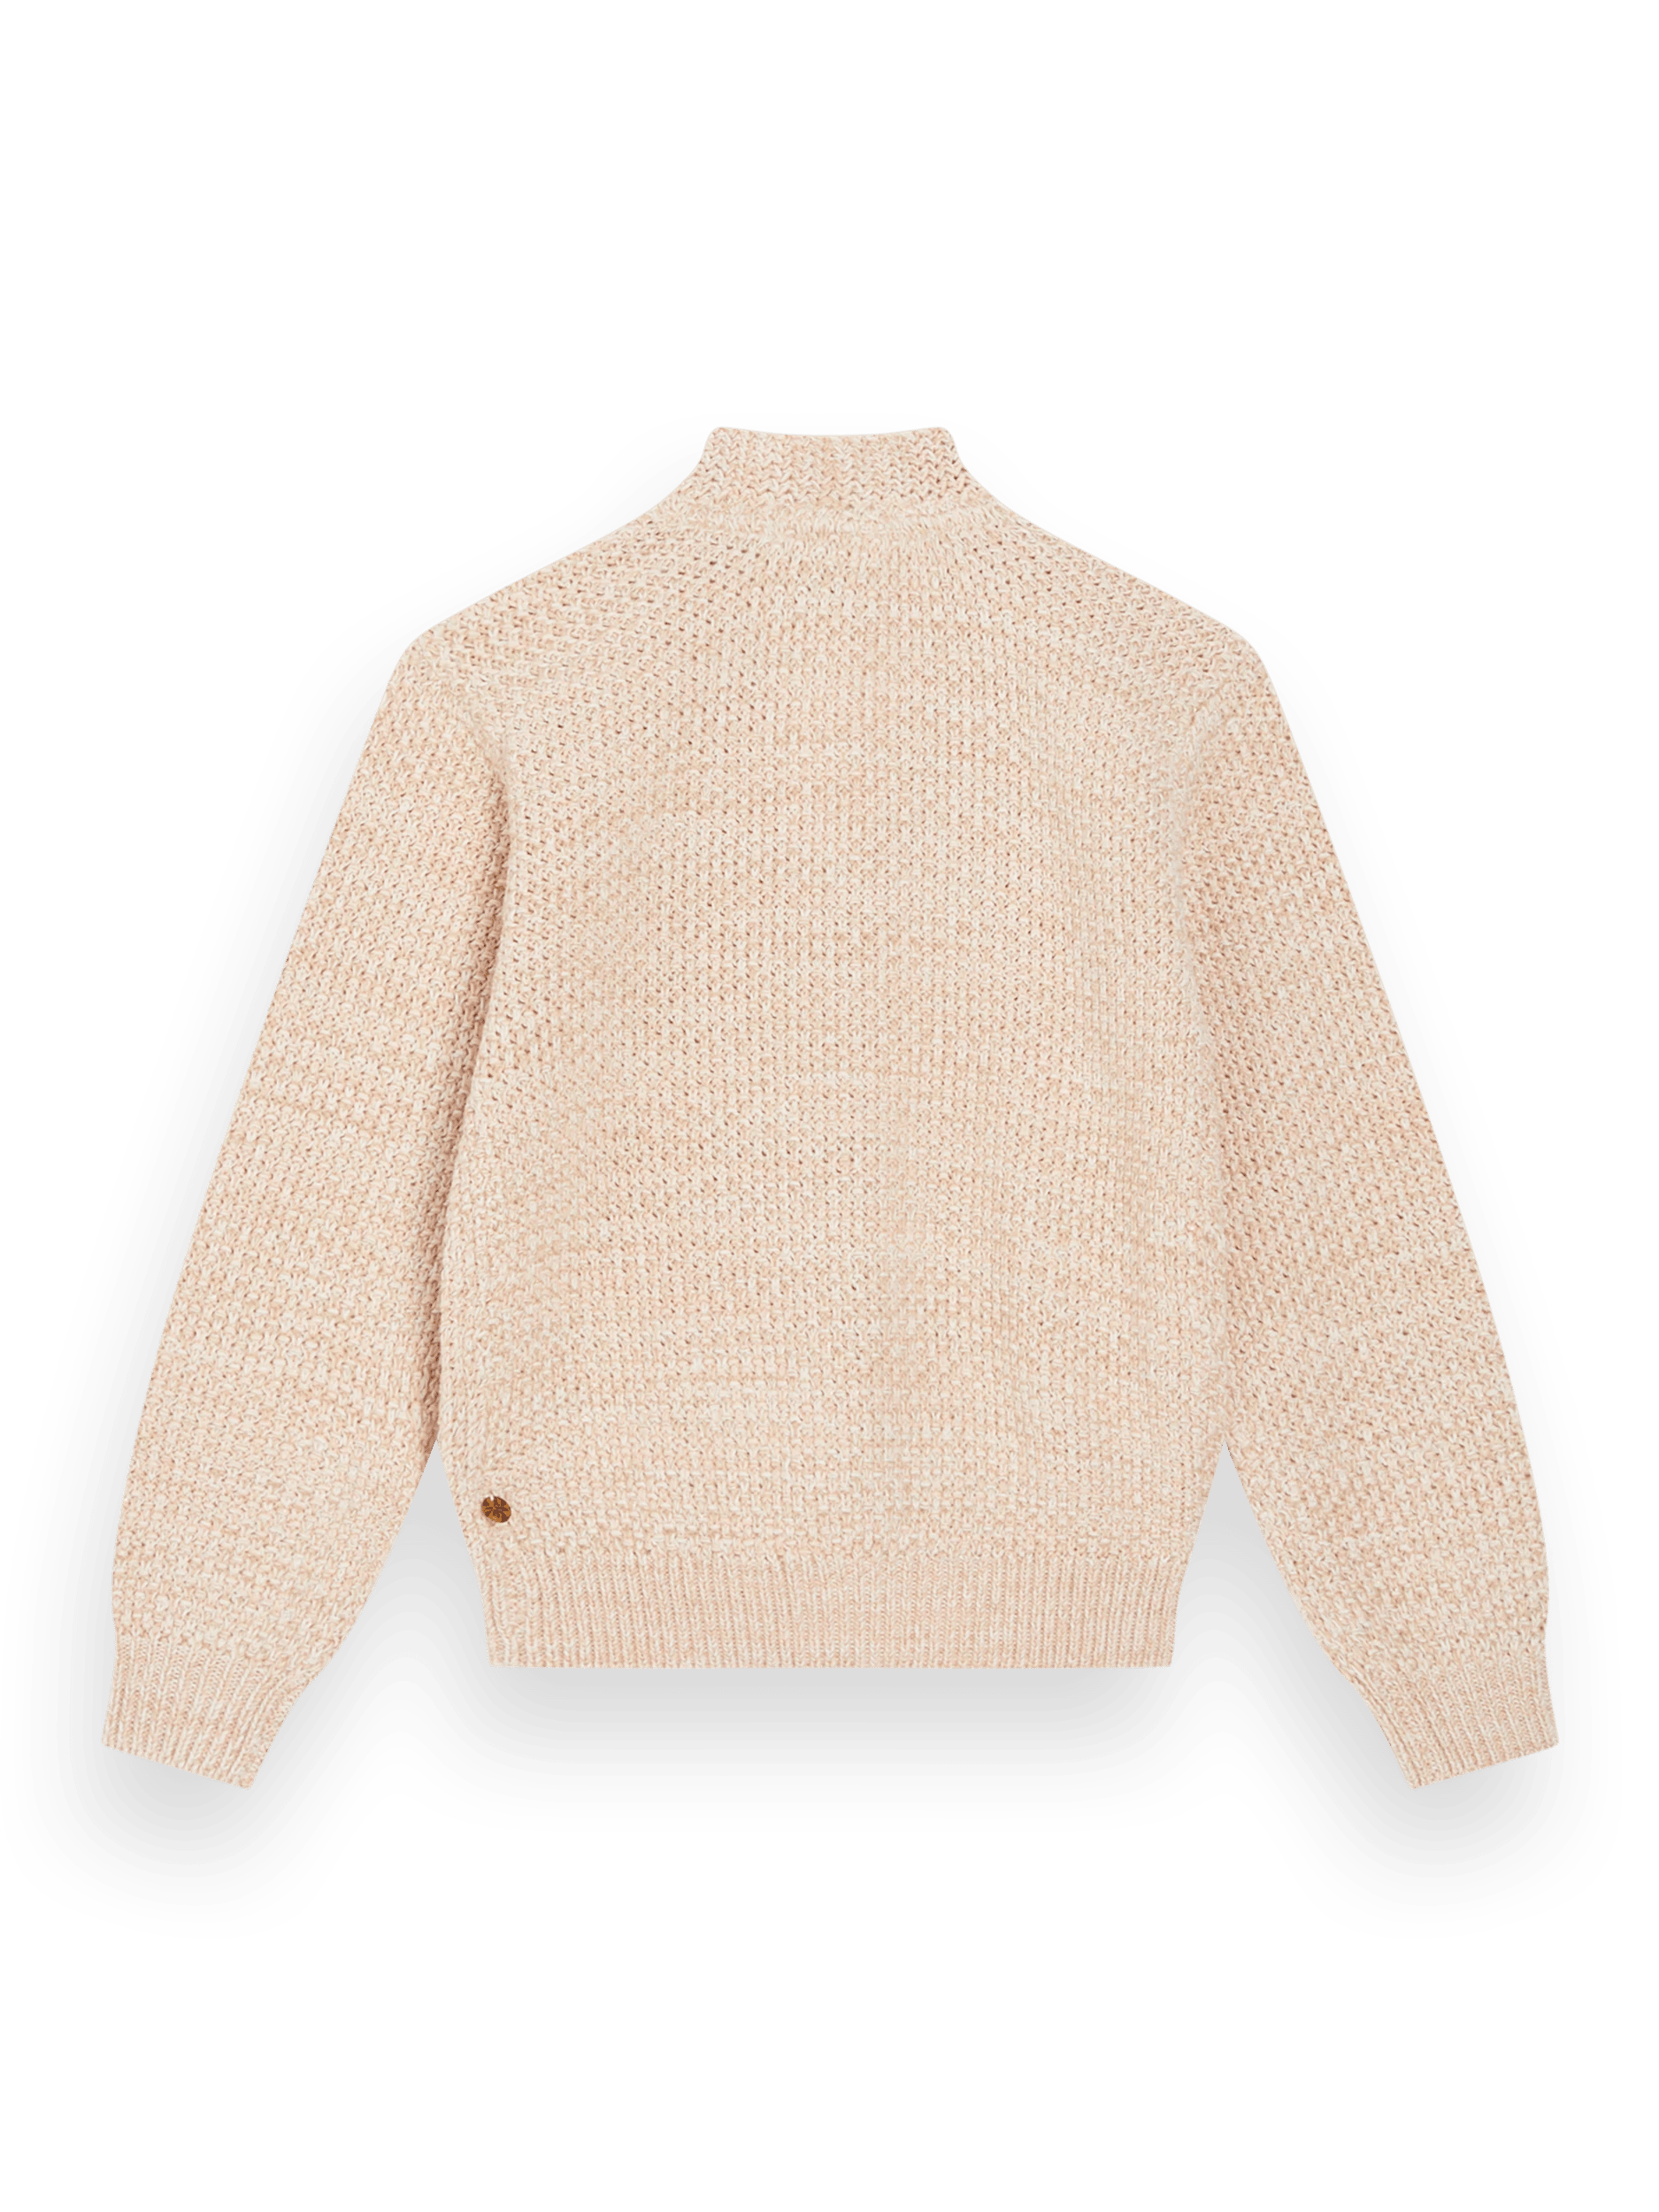 Scotch & Soda V-neck cardigan sweater BCK